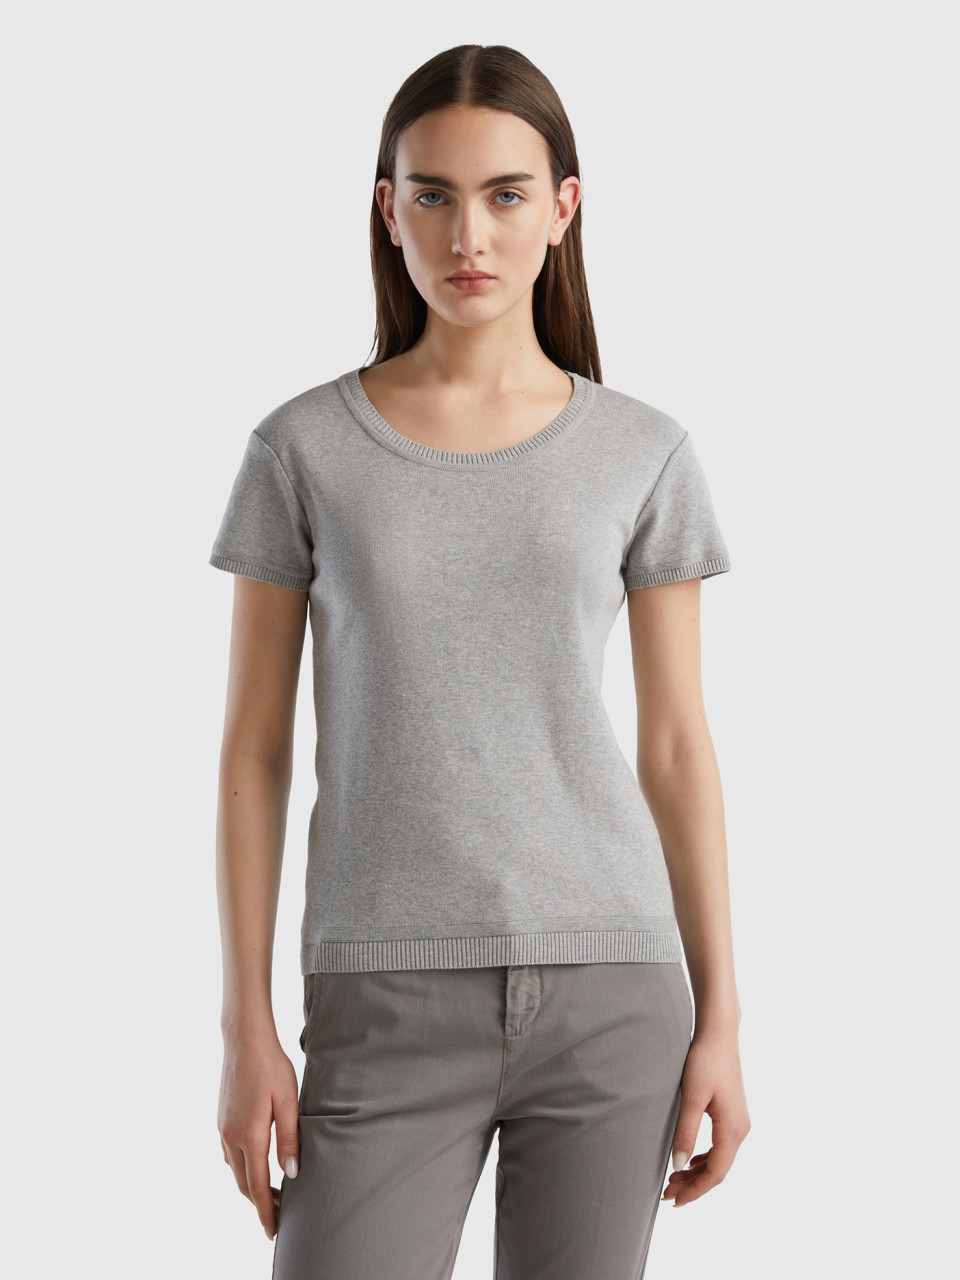 Benetton Online exclusive, Short Sleeve Sweater In 100% Cotton, Light Gray, Women